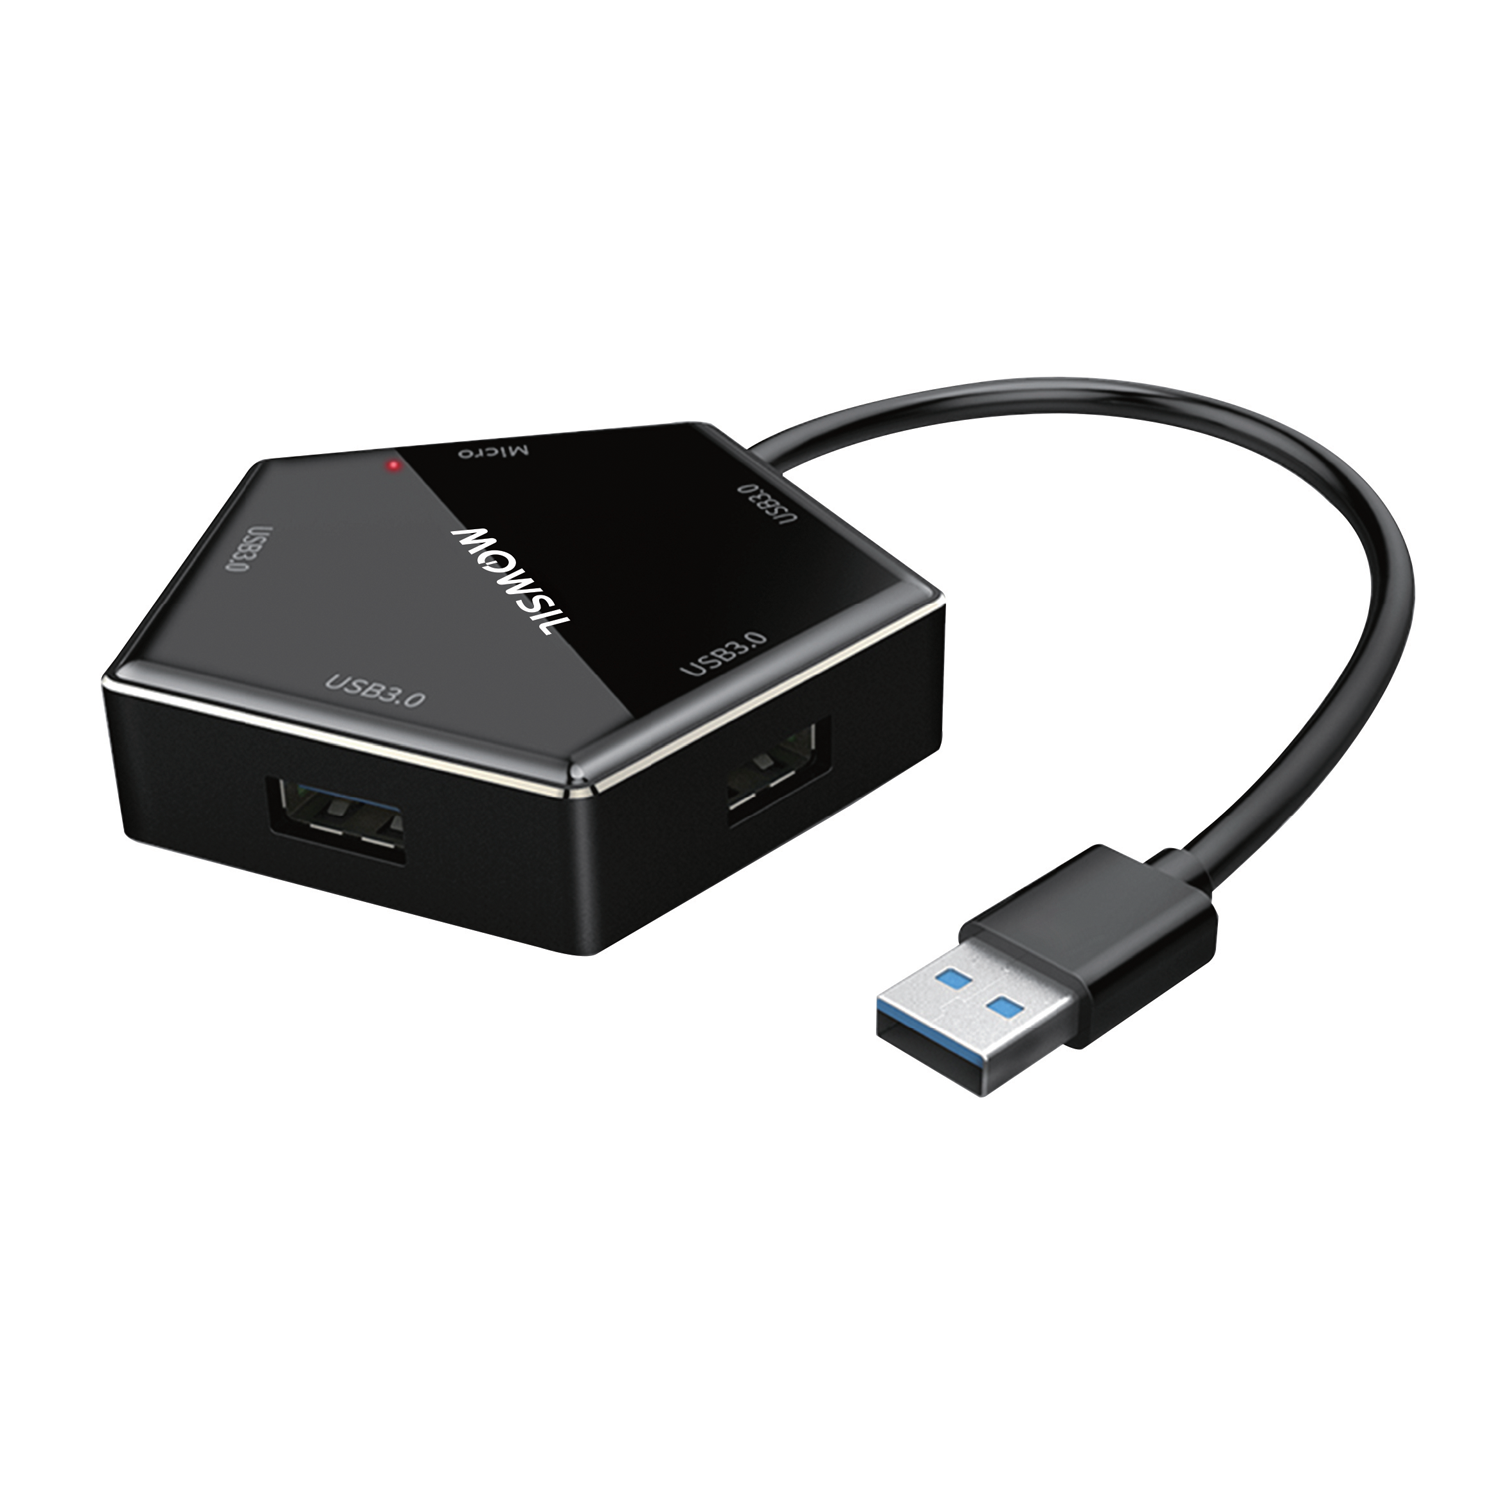 Mowsil USB 3.0 4 Port Hub